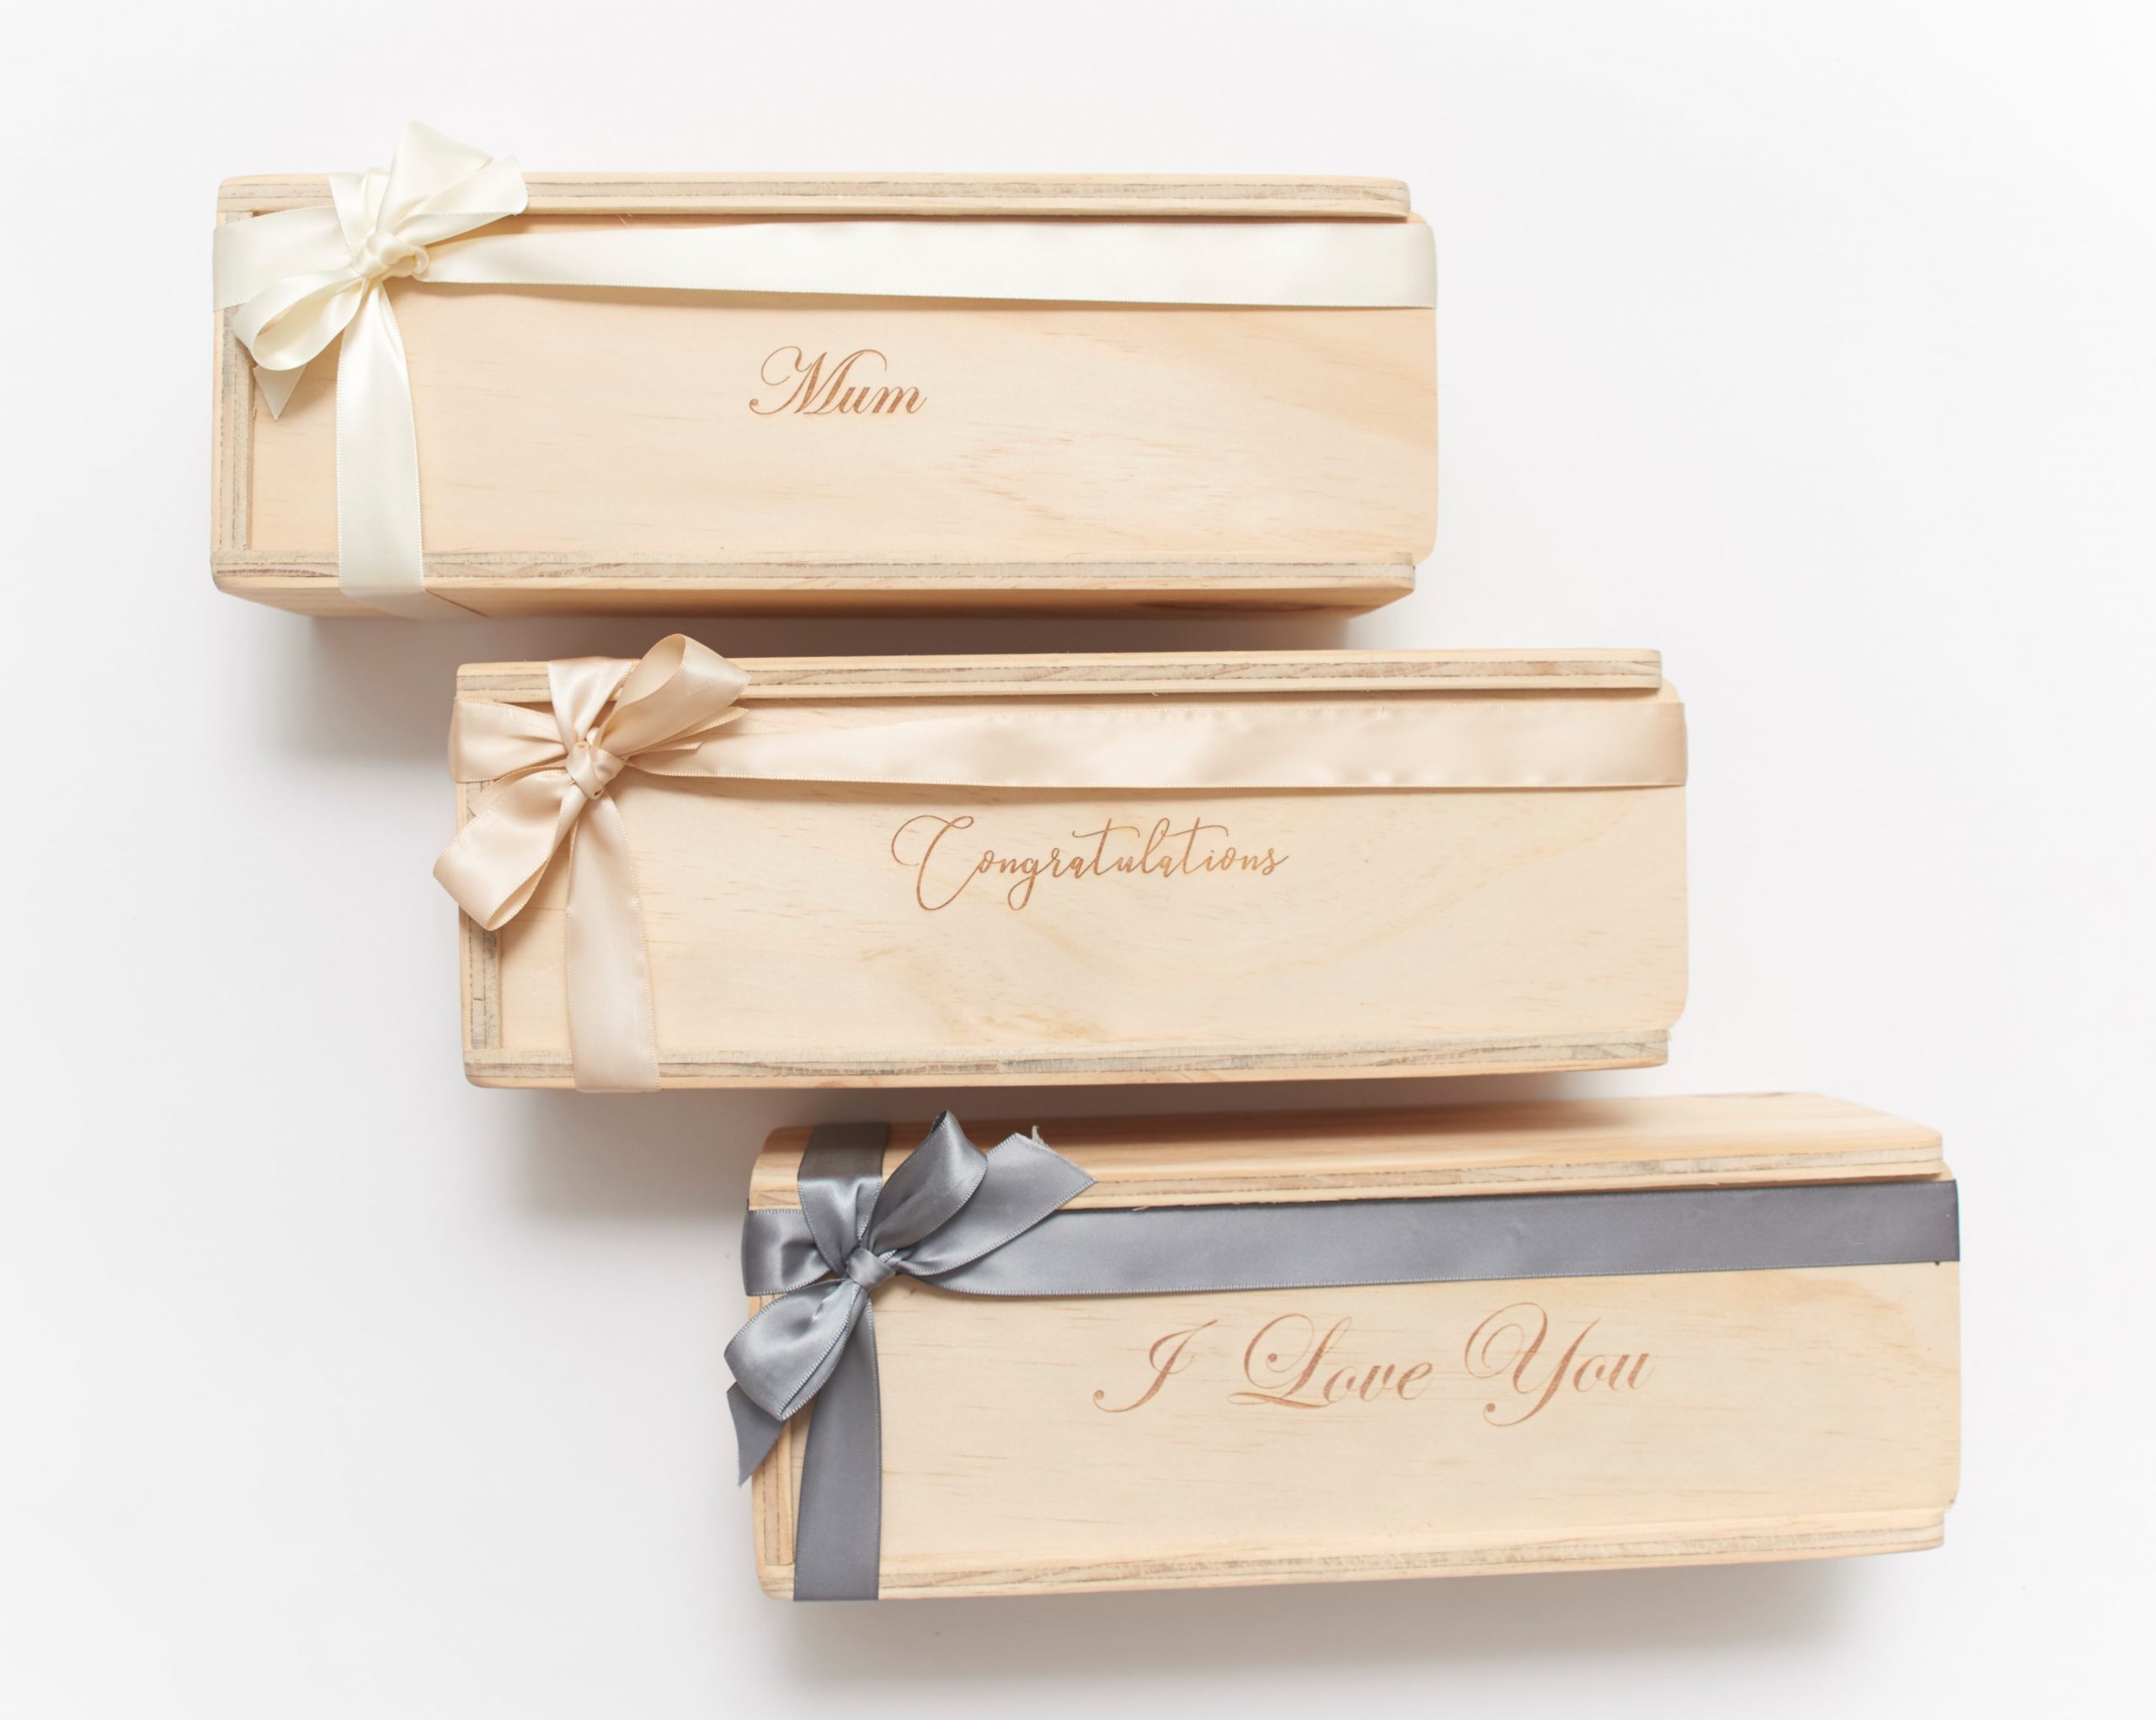 Champagne Box - Hamper  The Bridal Box Co. Your custom gifts